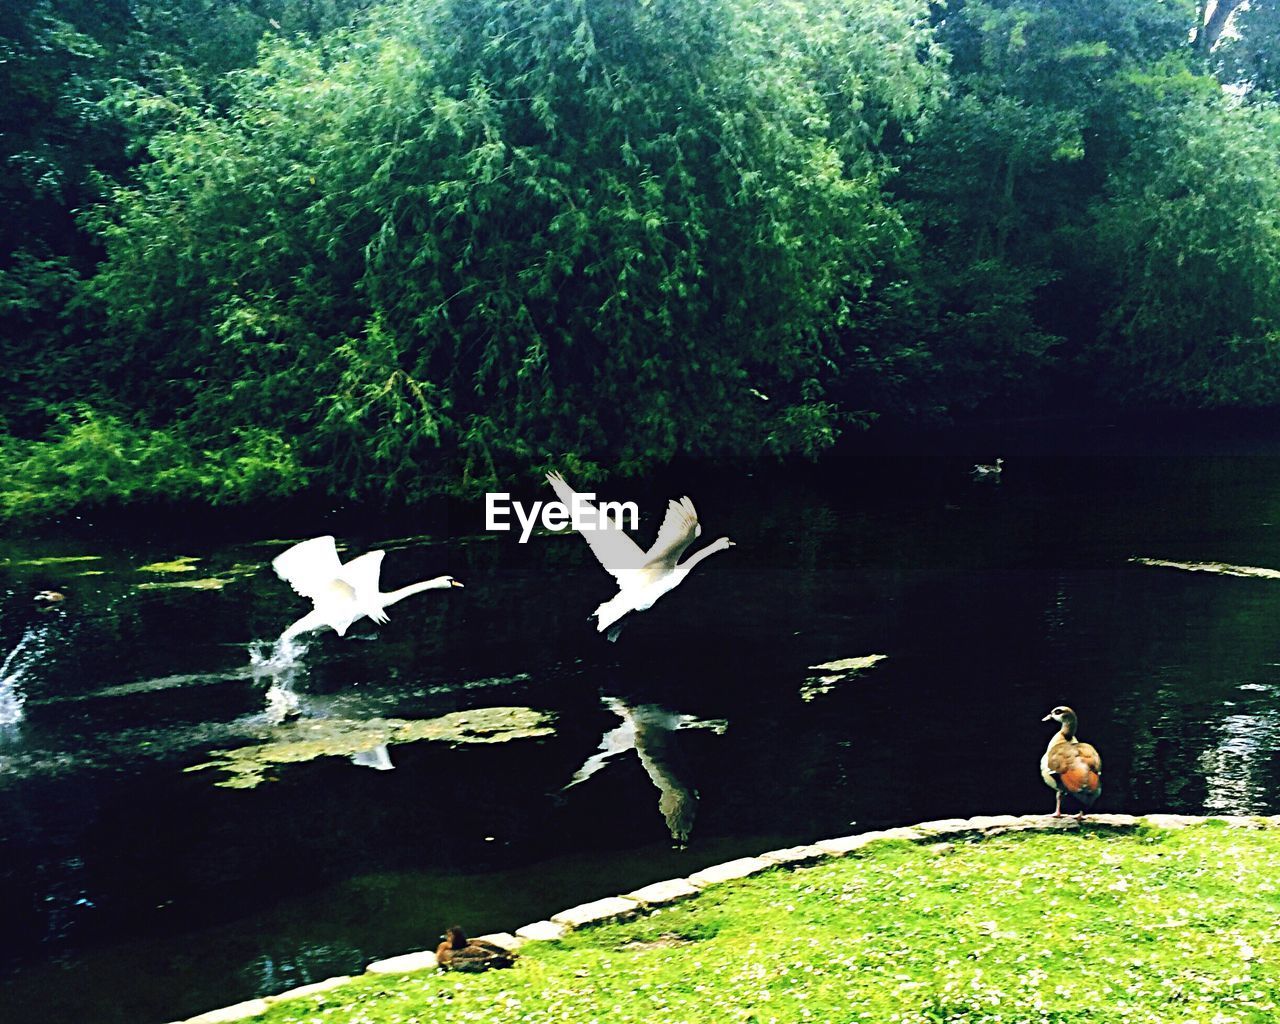 Swans flying over lake against trees